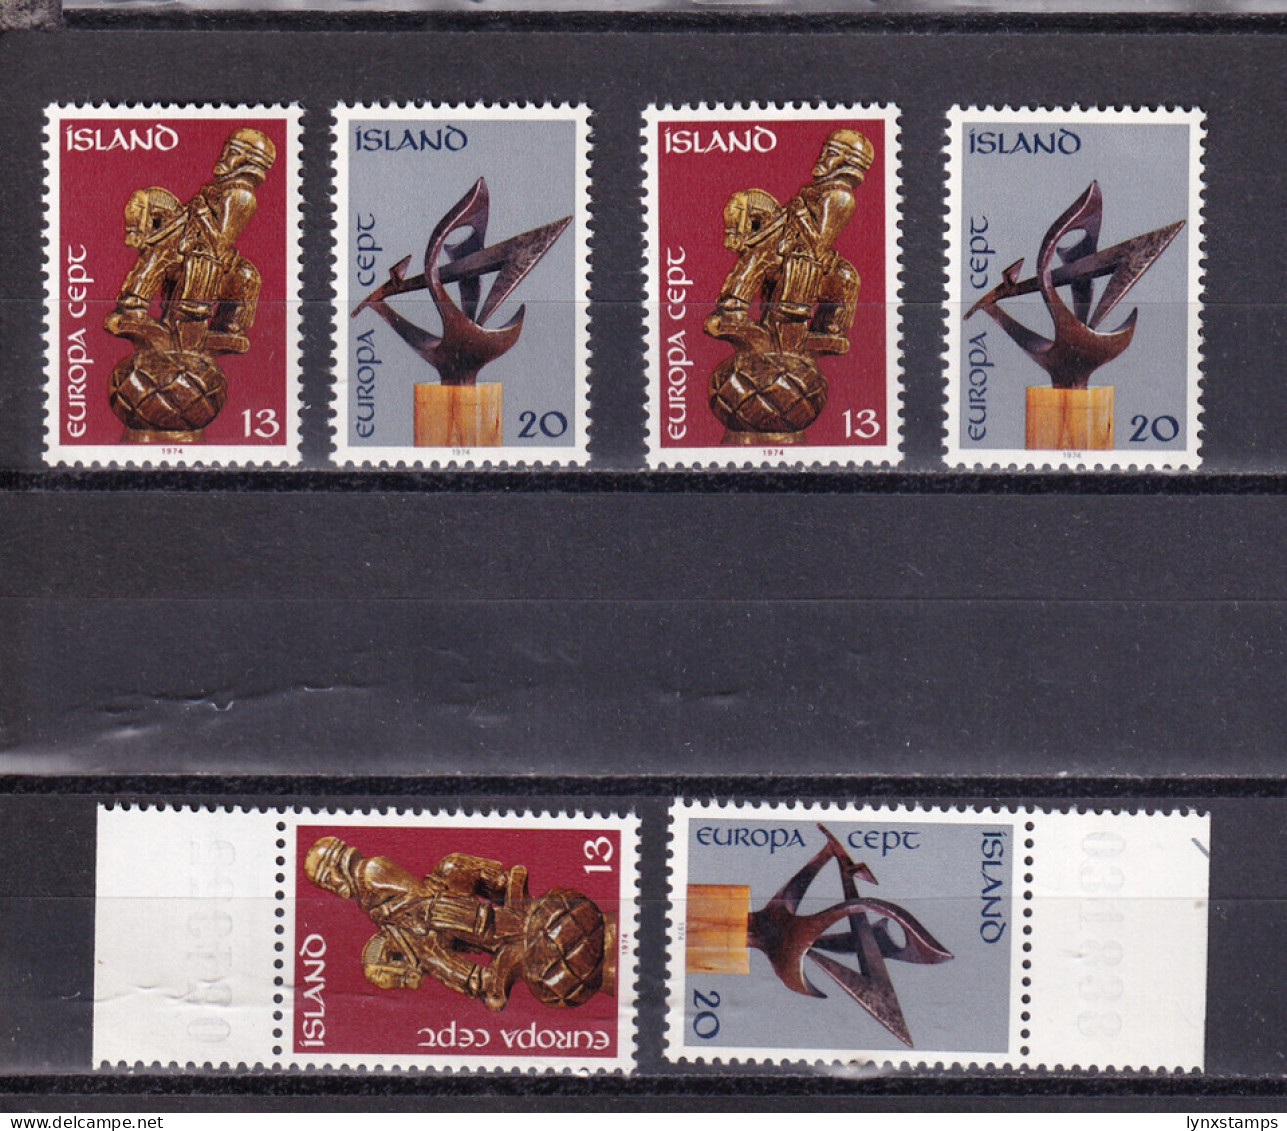 LI03 Iceland Europa (C.E.P.T.) 1974 - Sculptures Mint Stamps Selection - Nuevos